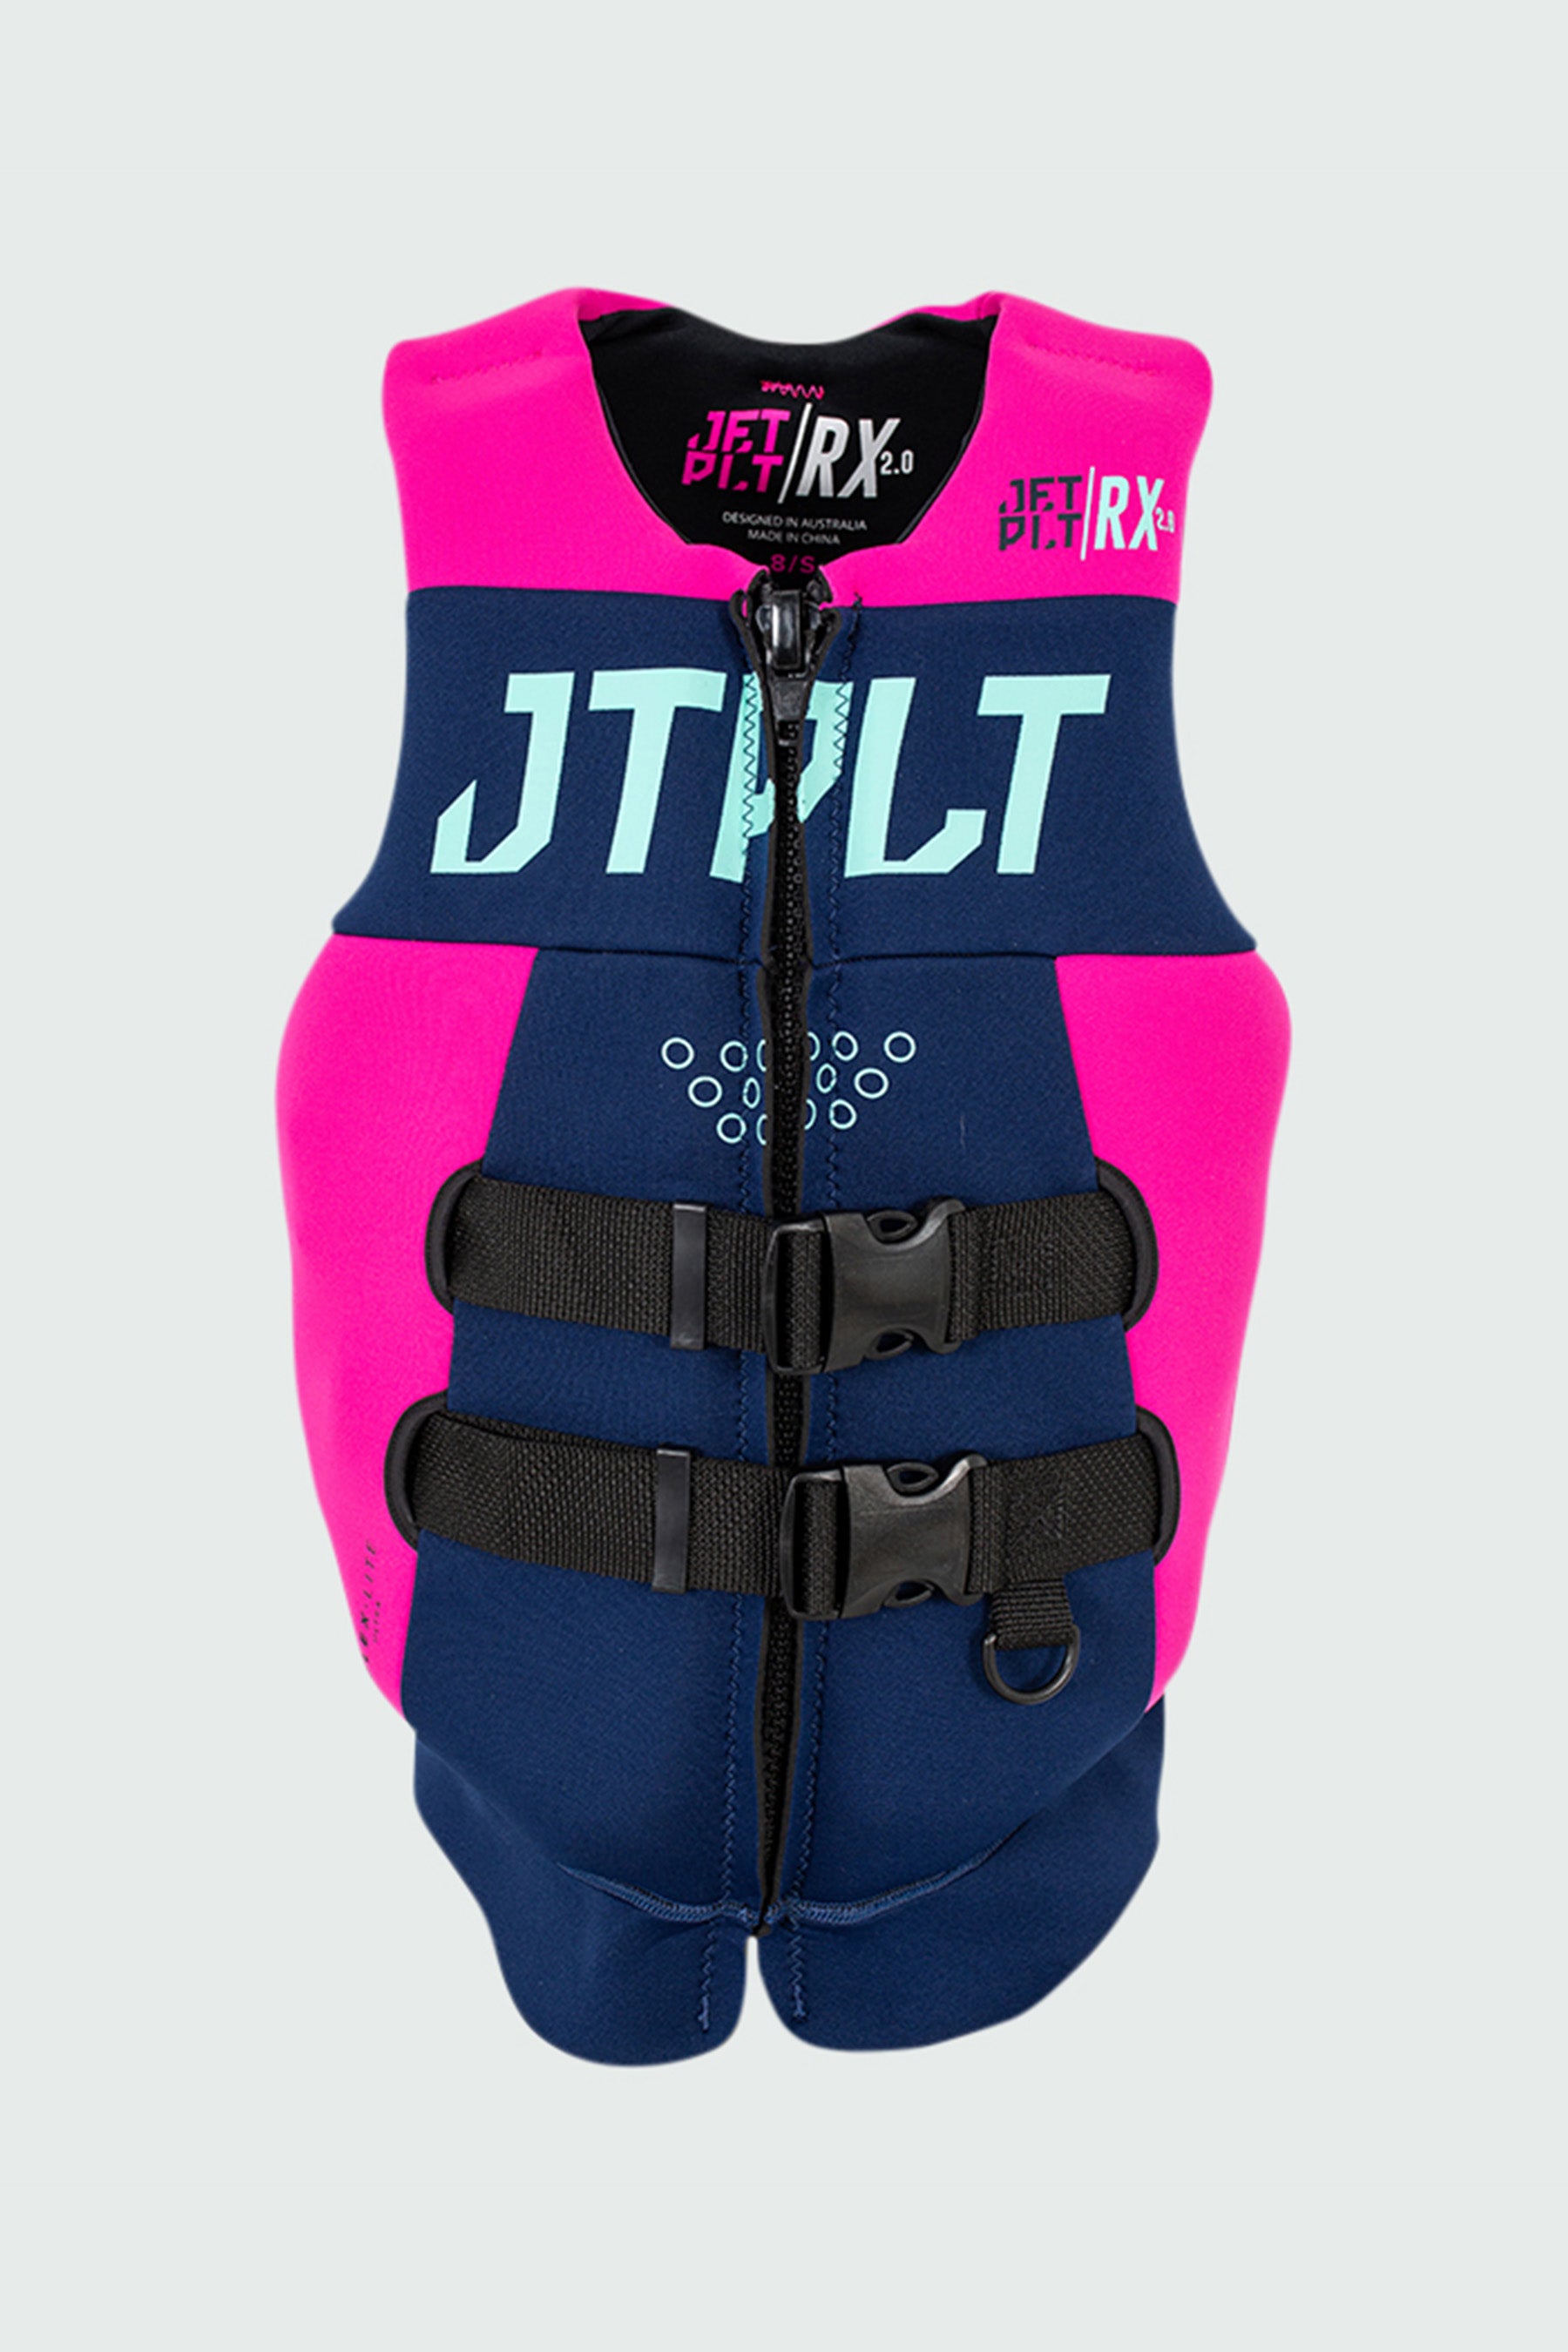 Jetpilot Rx Ladies Life Jacket - Navy/Pink